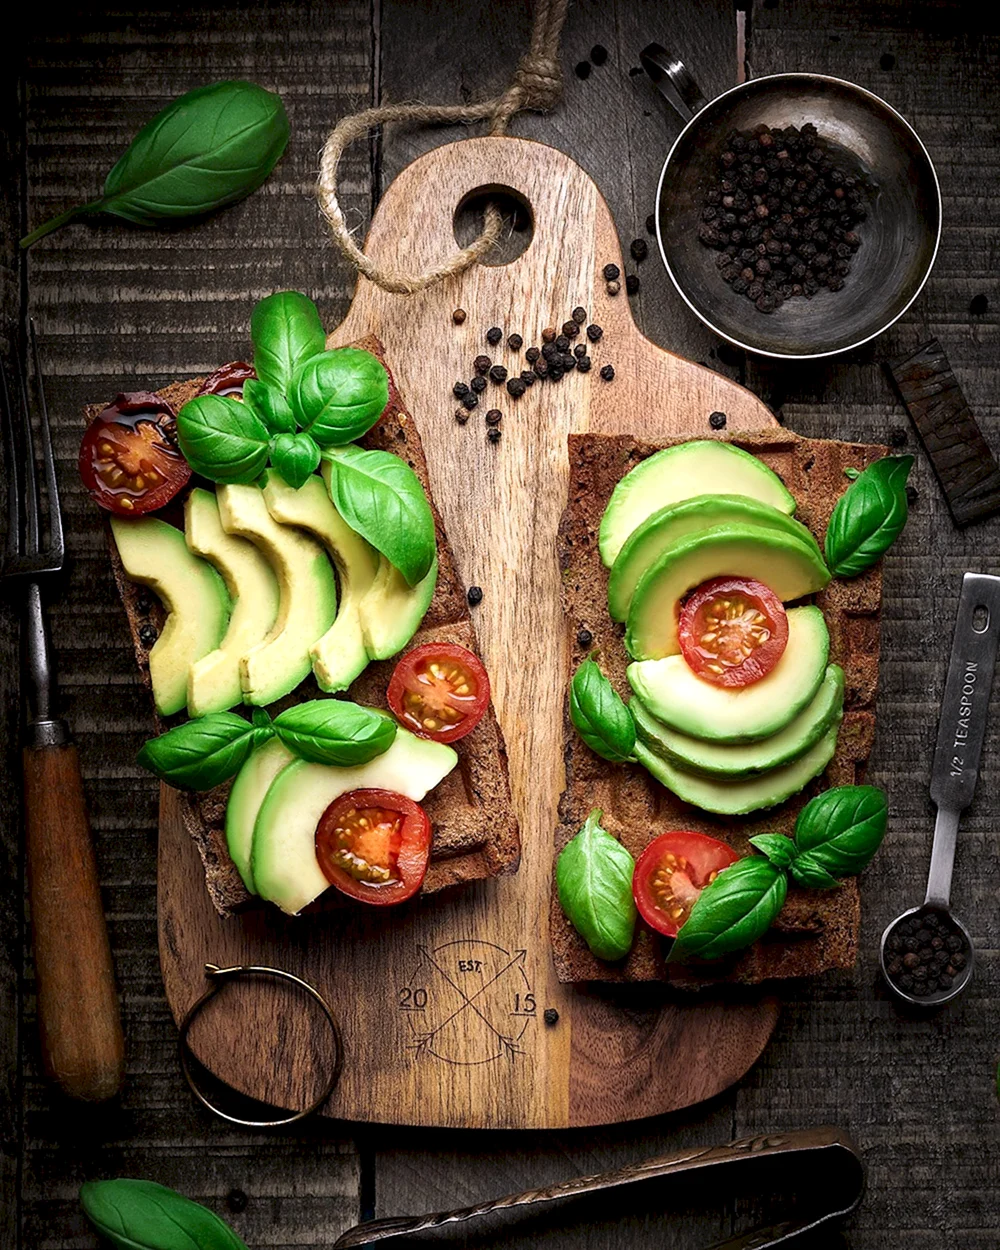 Food Photography